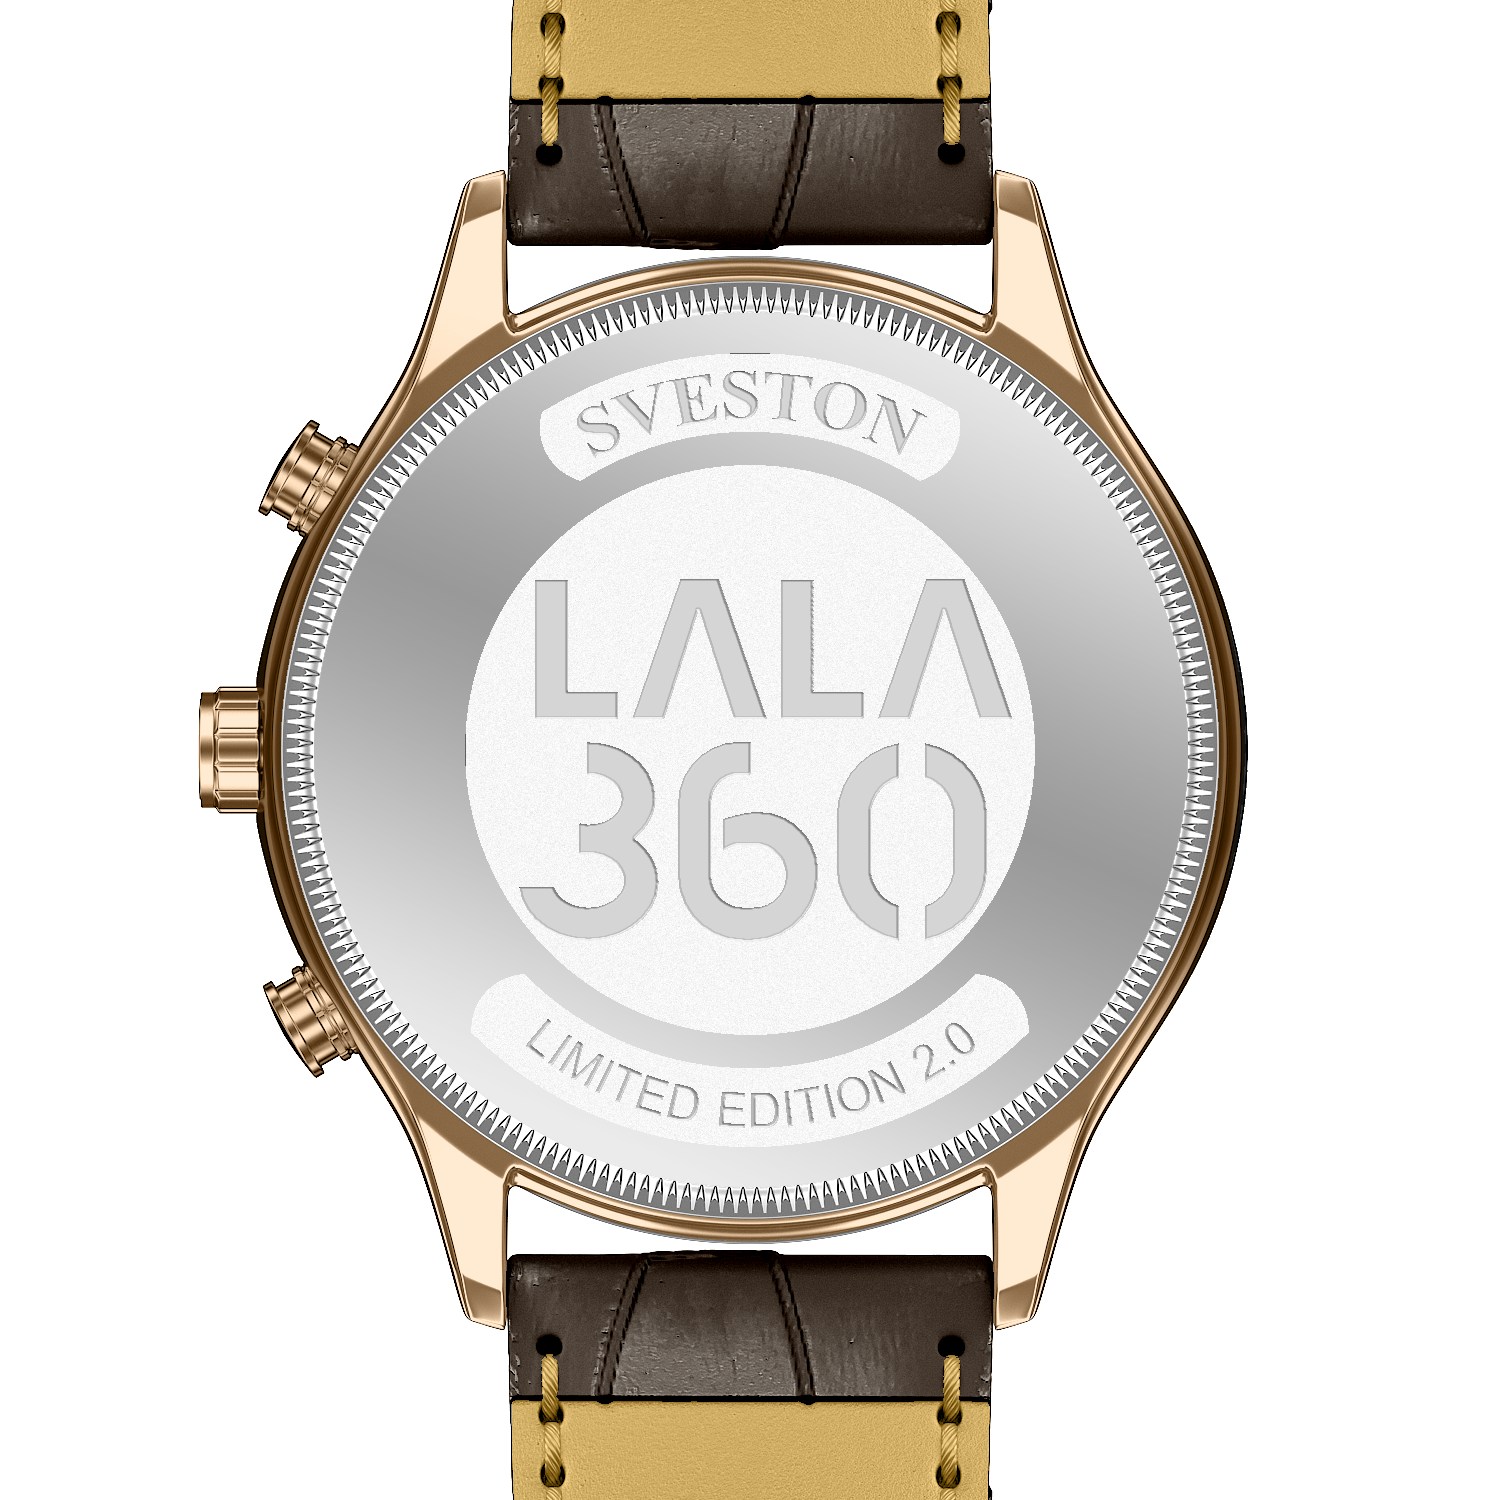 Sveston Lala 360 (Leather)